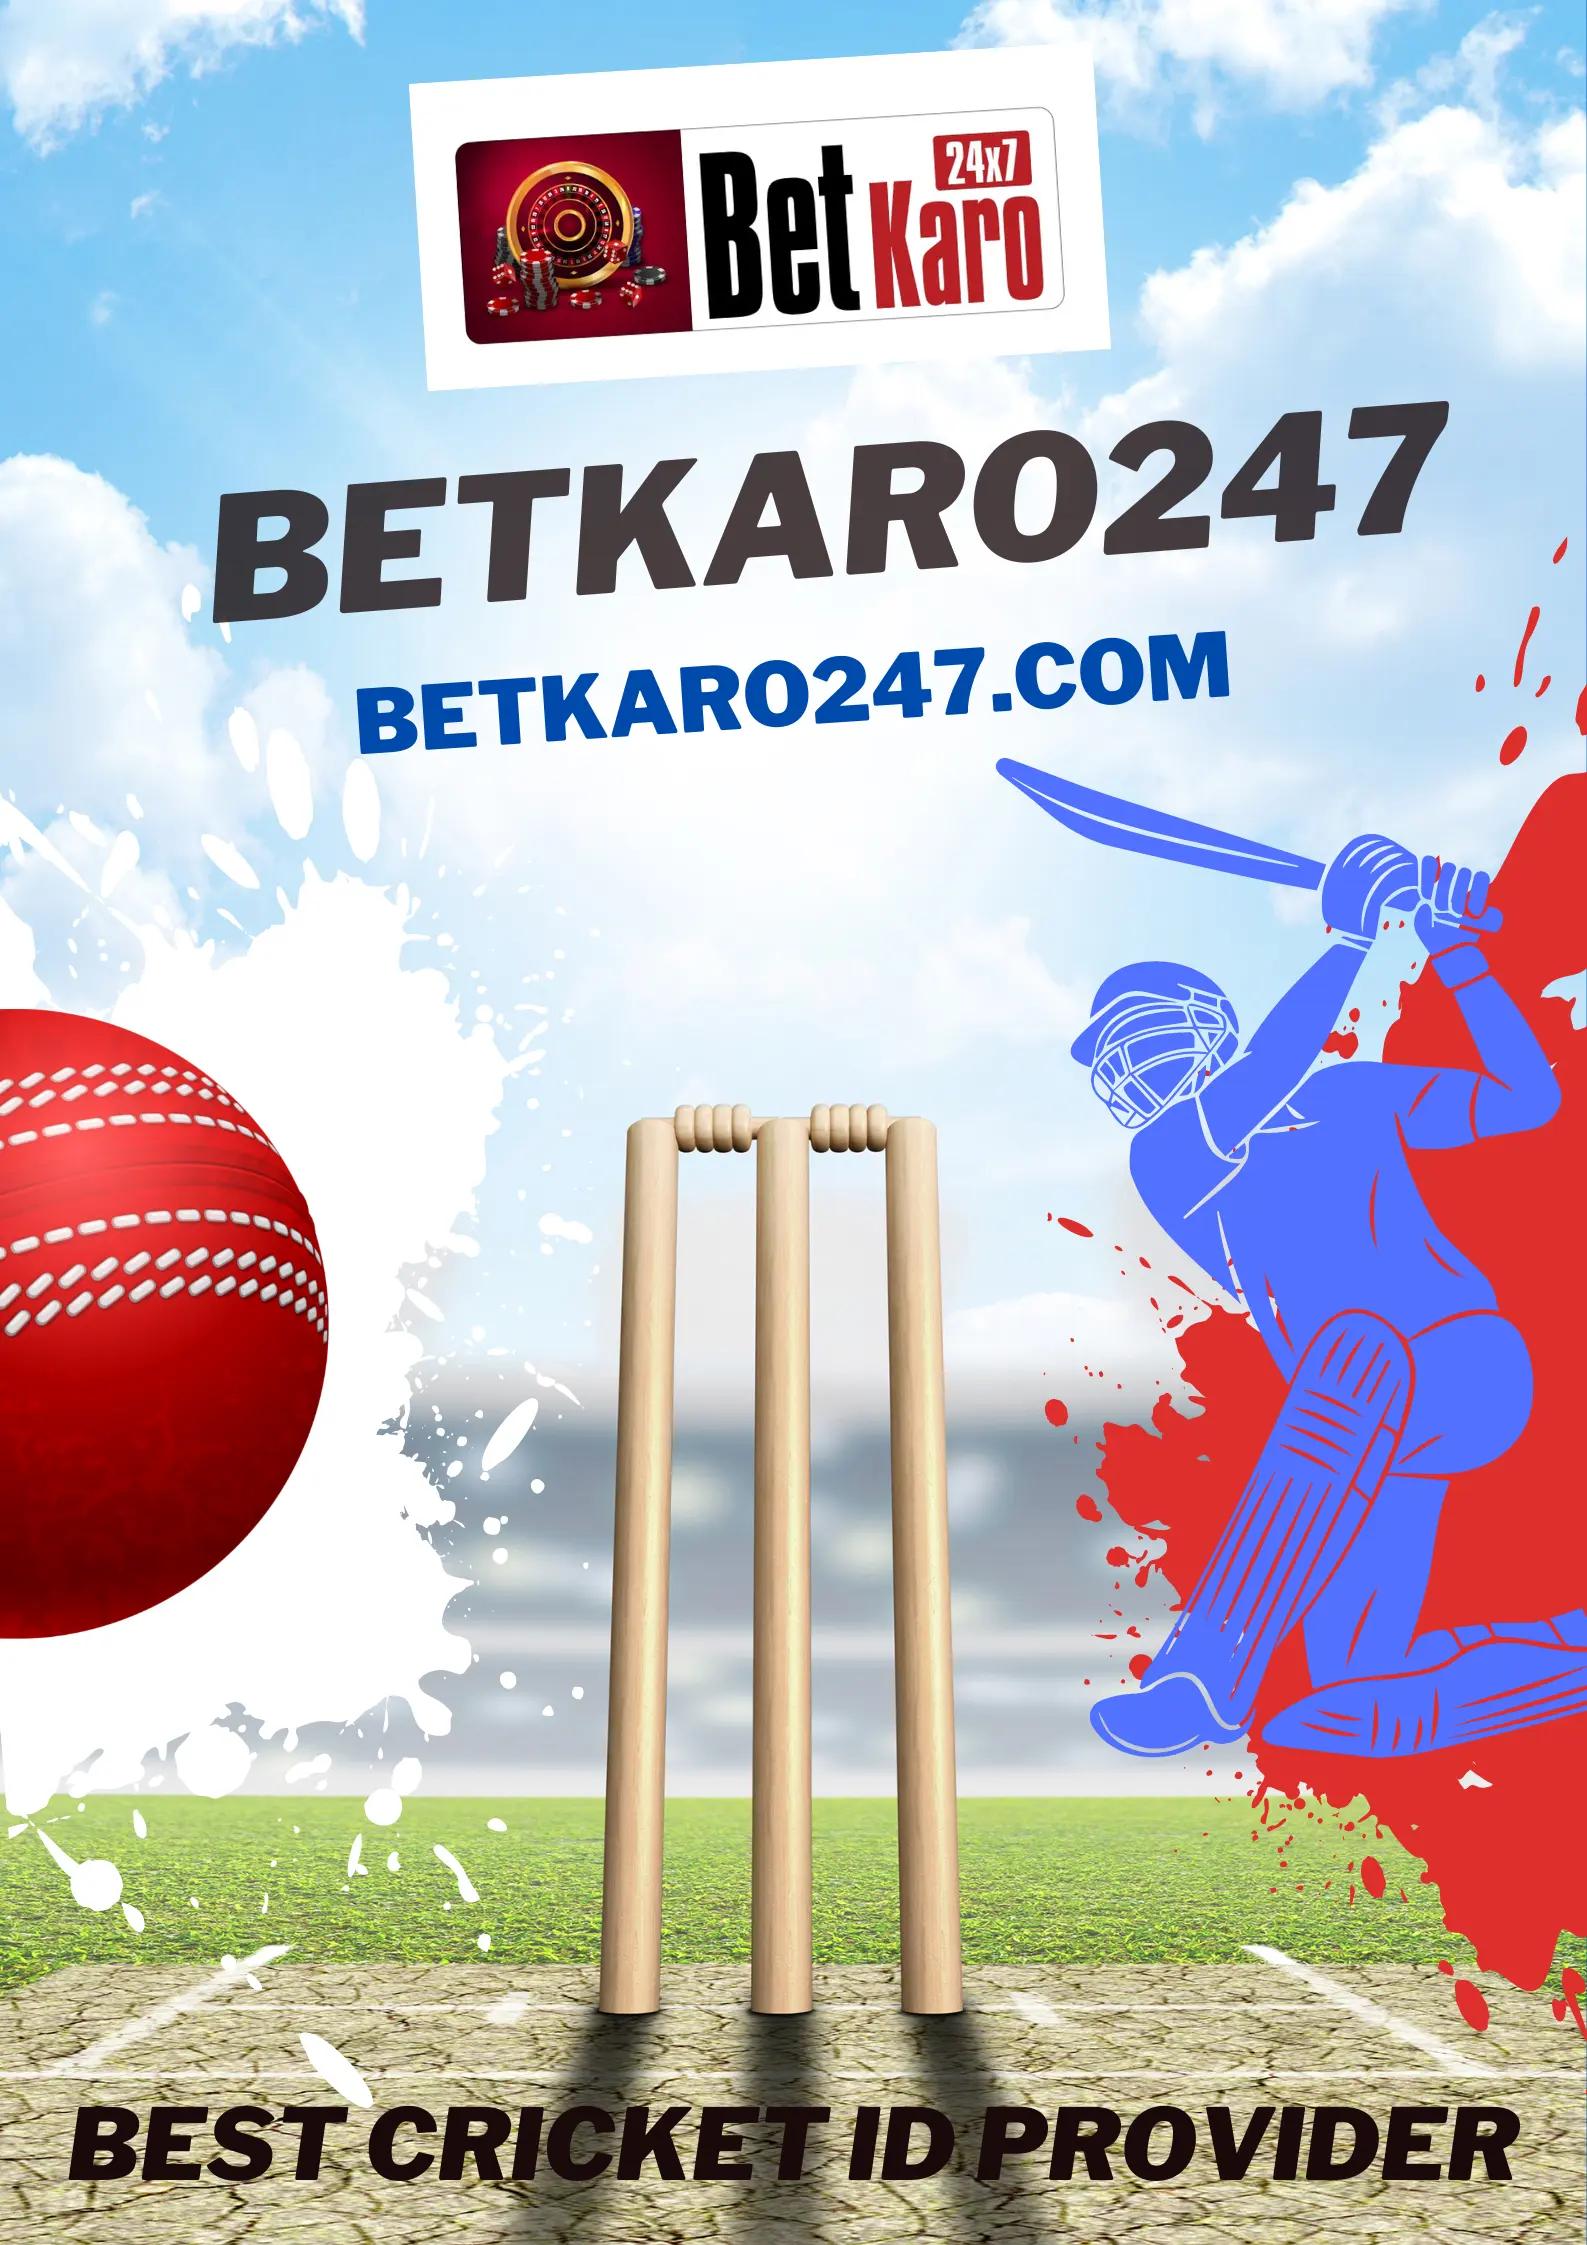 Best Cricket id provider | betkaro247